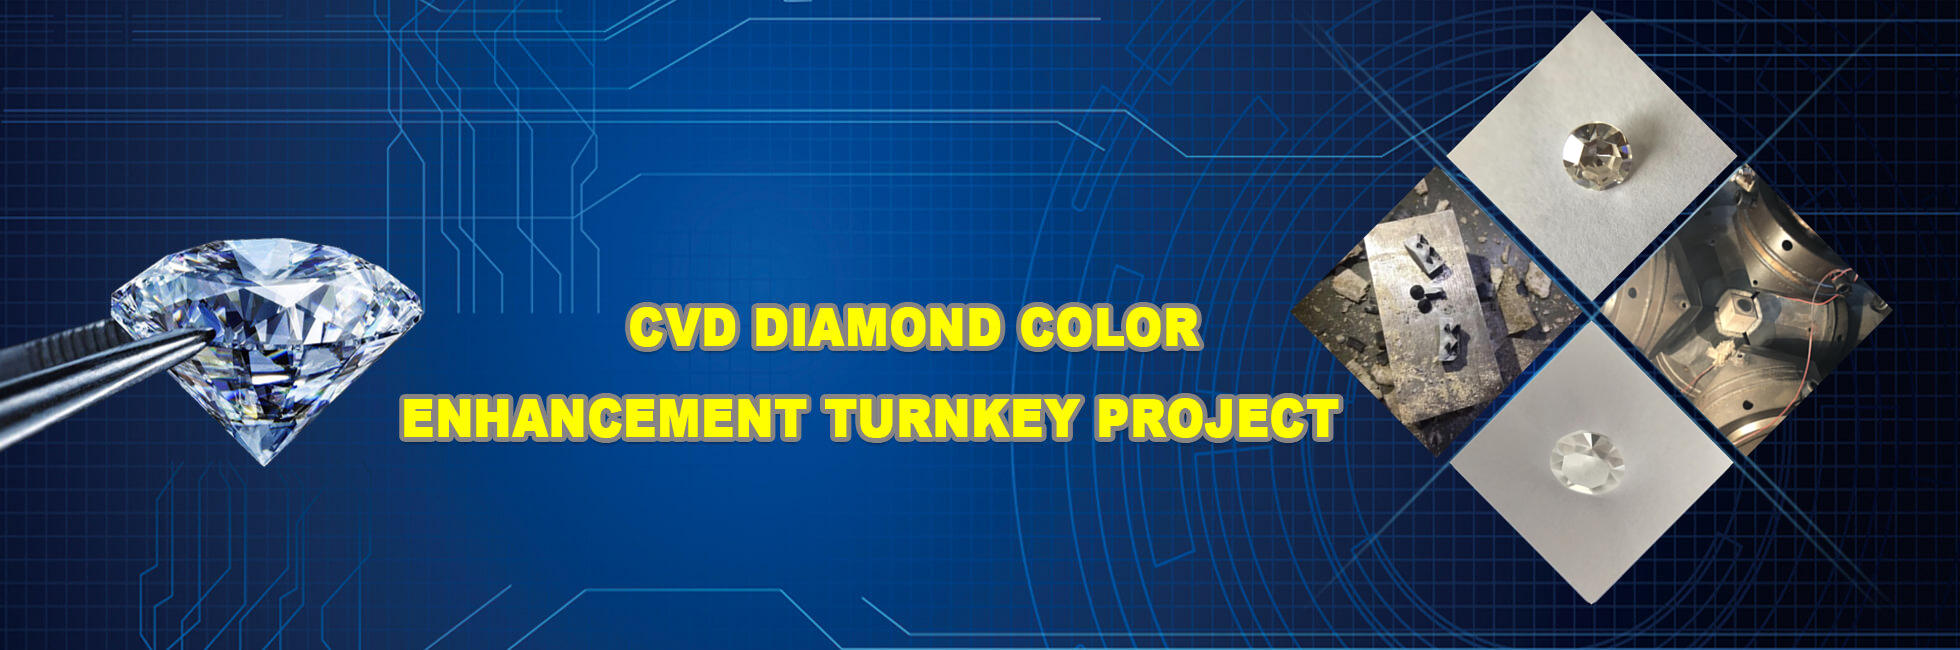 CVD diamond color enhancement